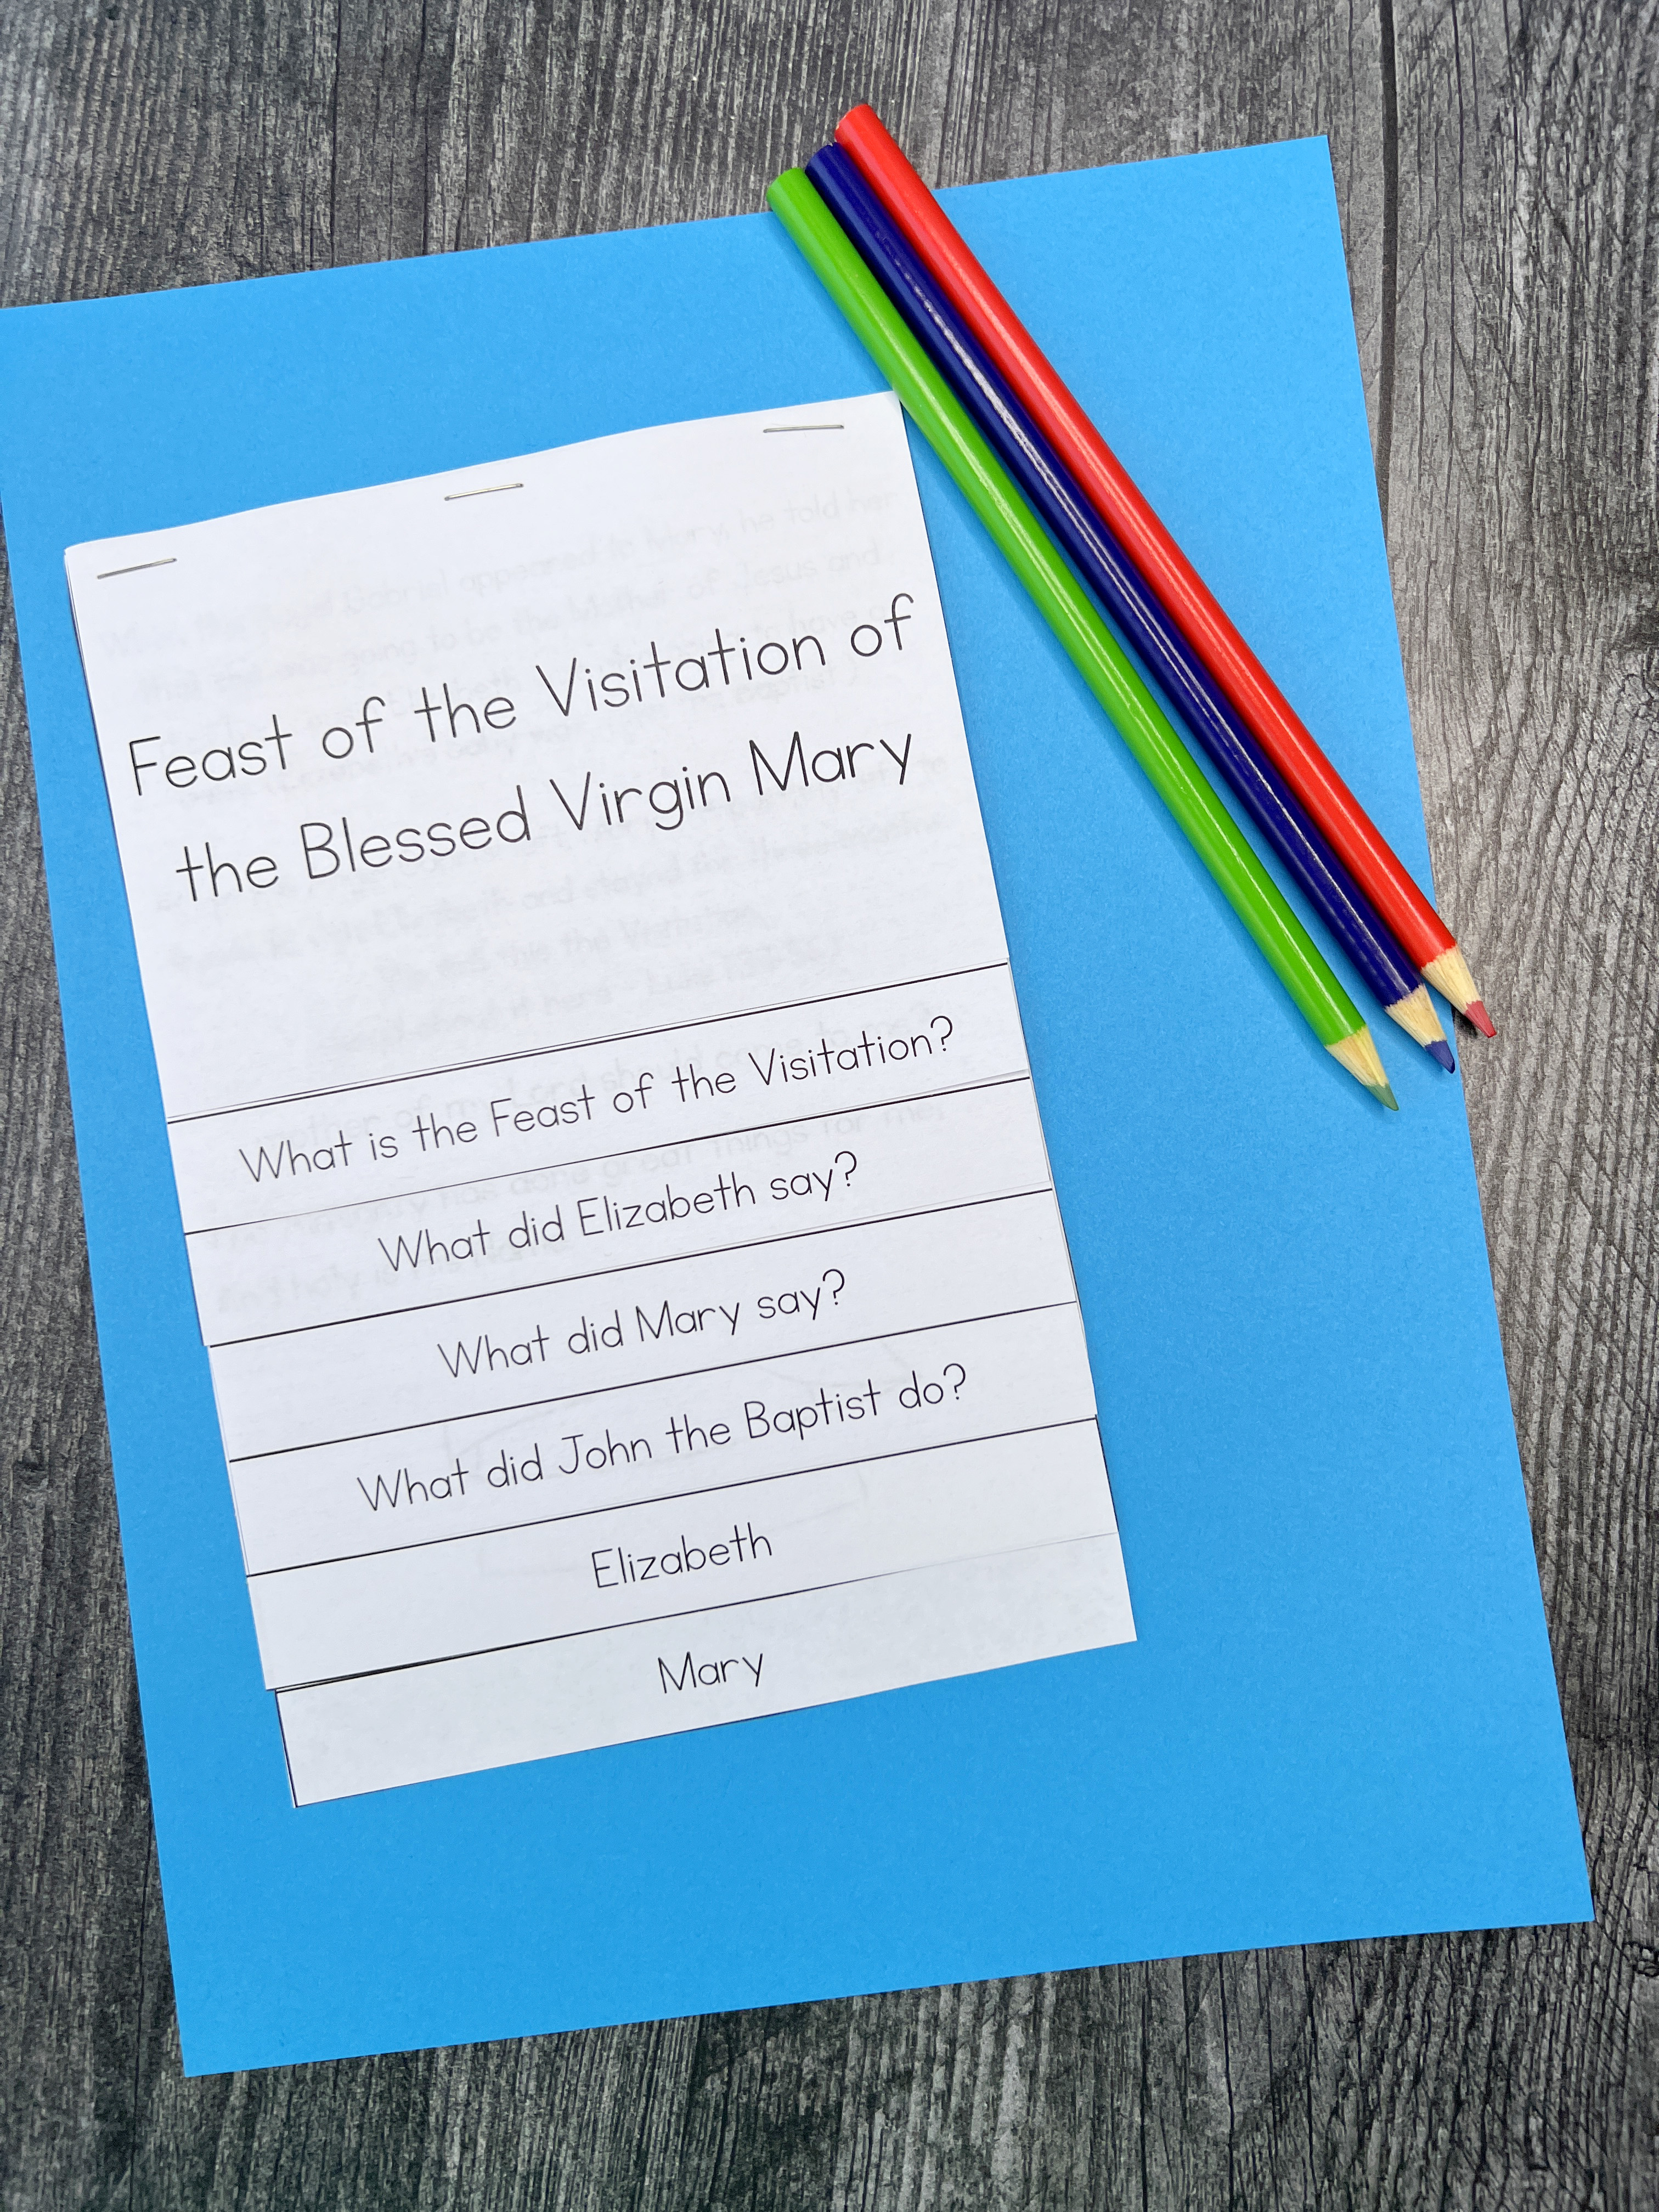 Feast of the Visitation Flip Book